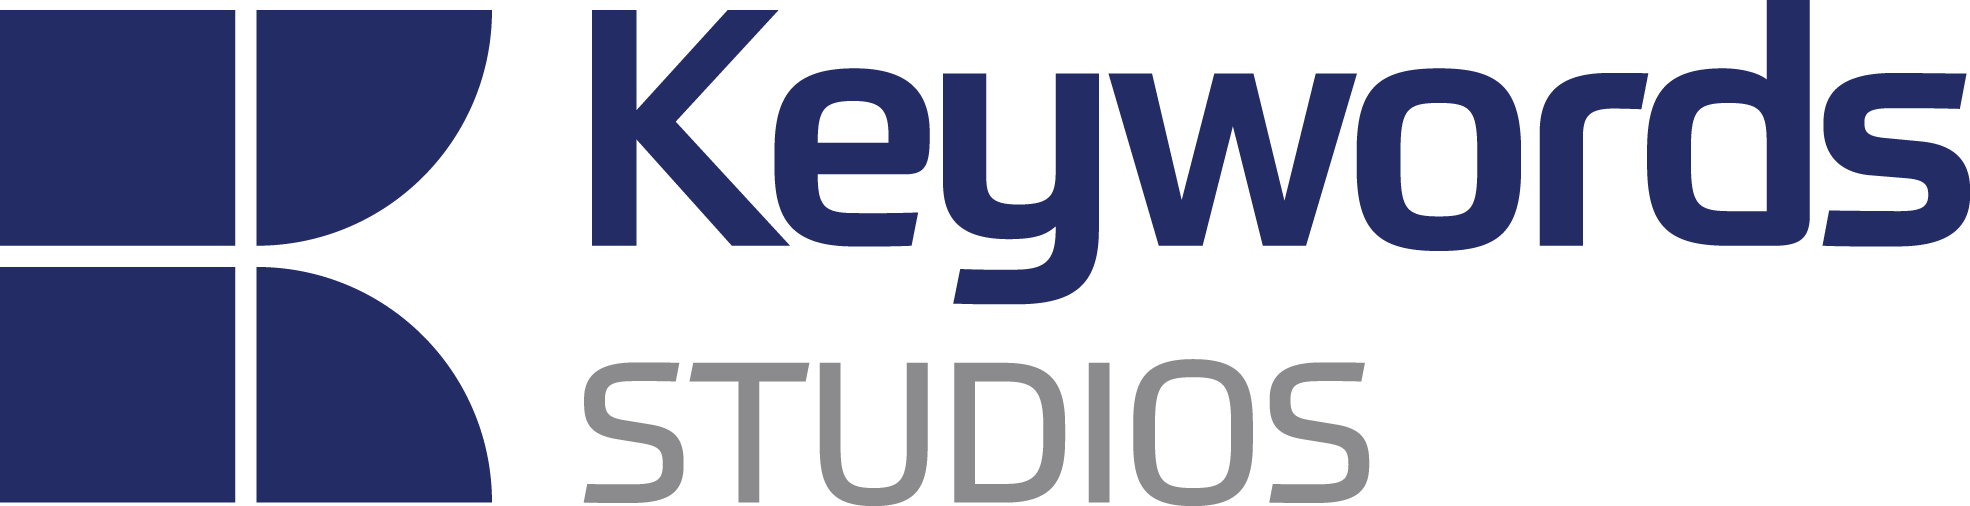 Keywords Studios Plc